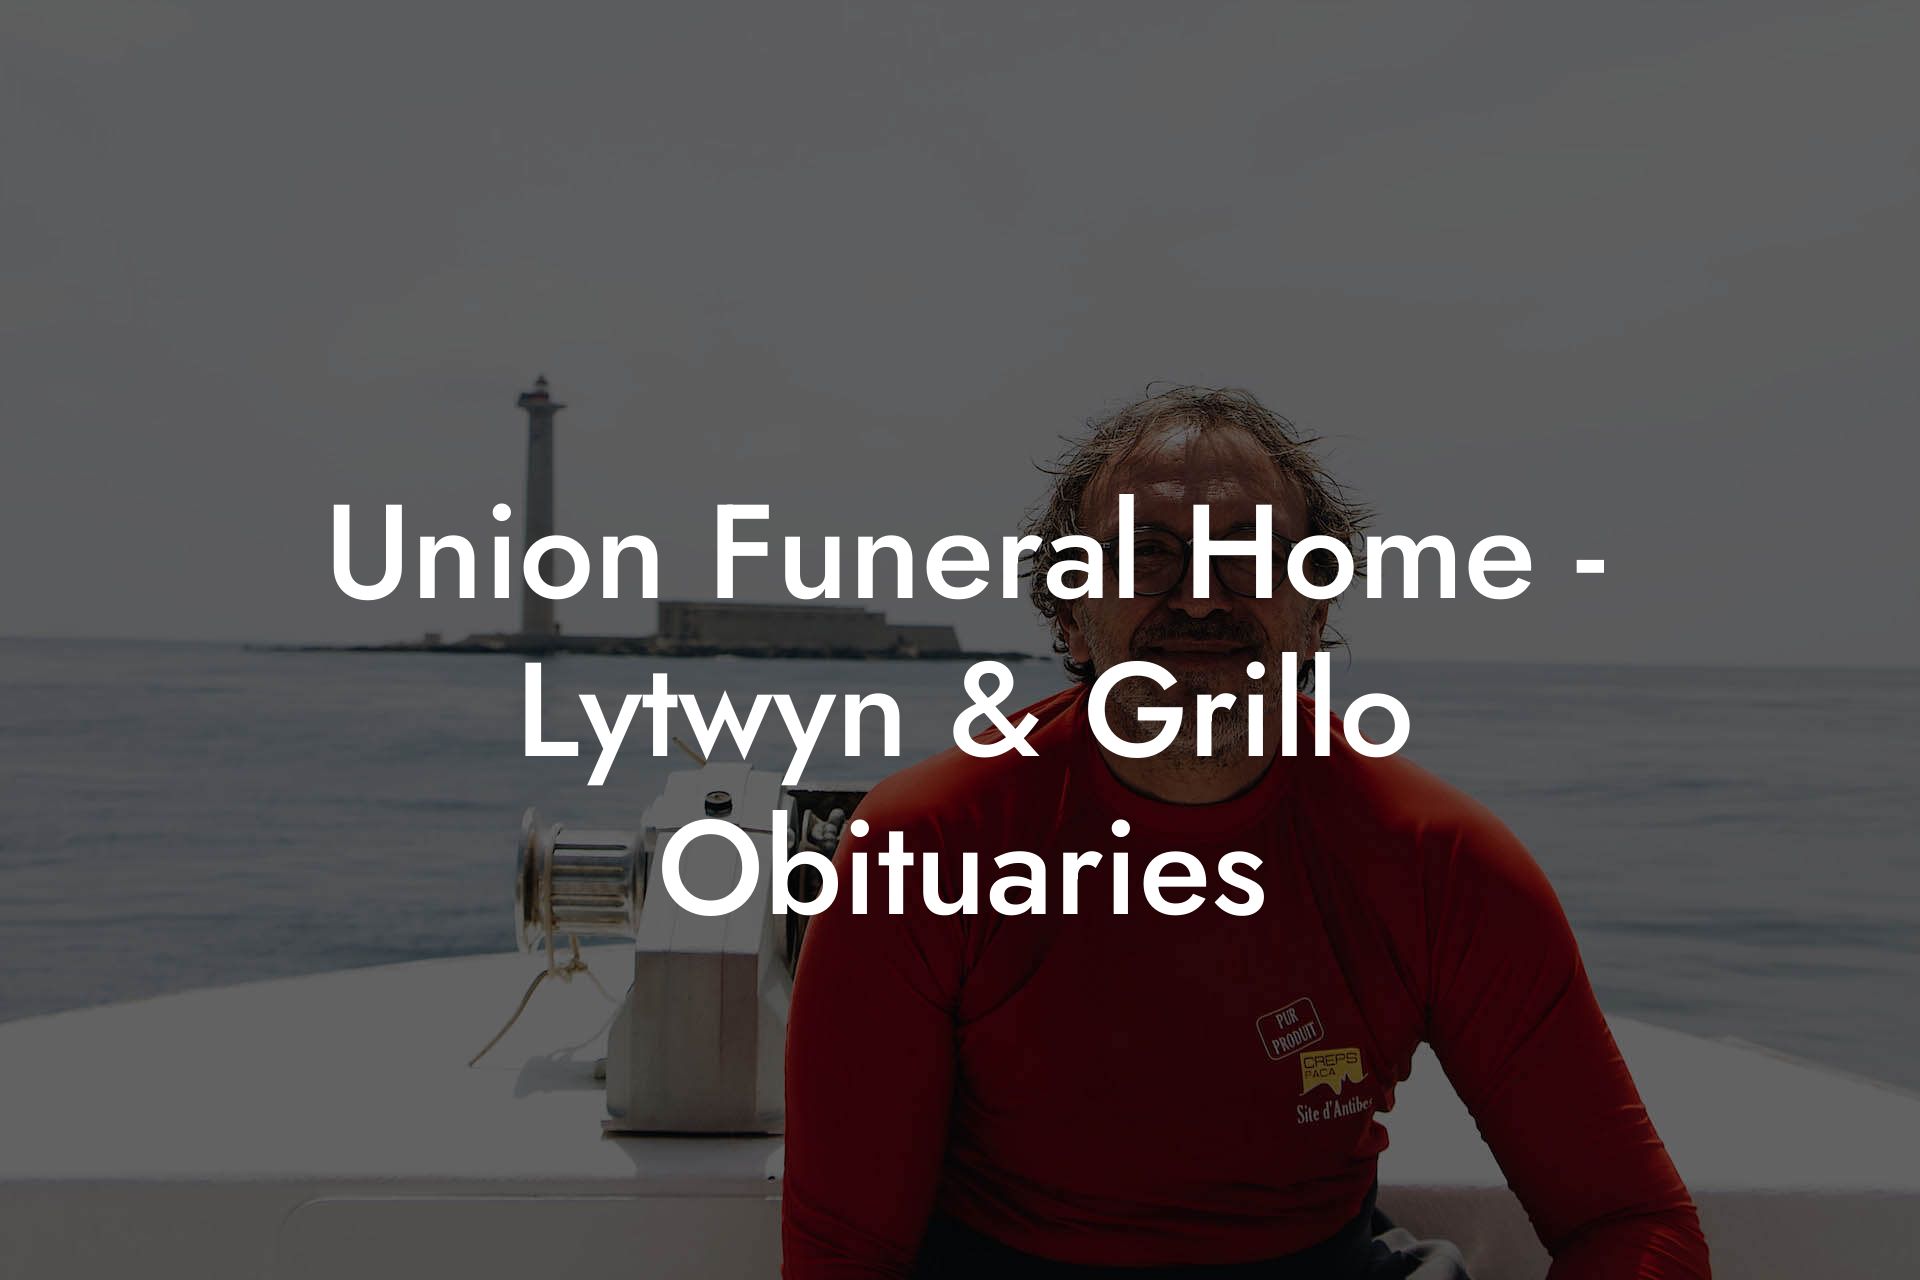 Union Funeral Home - Lytwyn & Grillo Obituaries